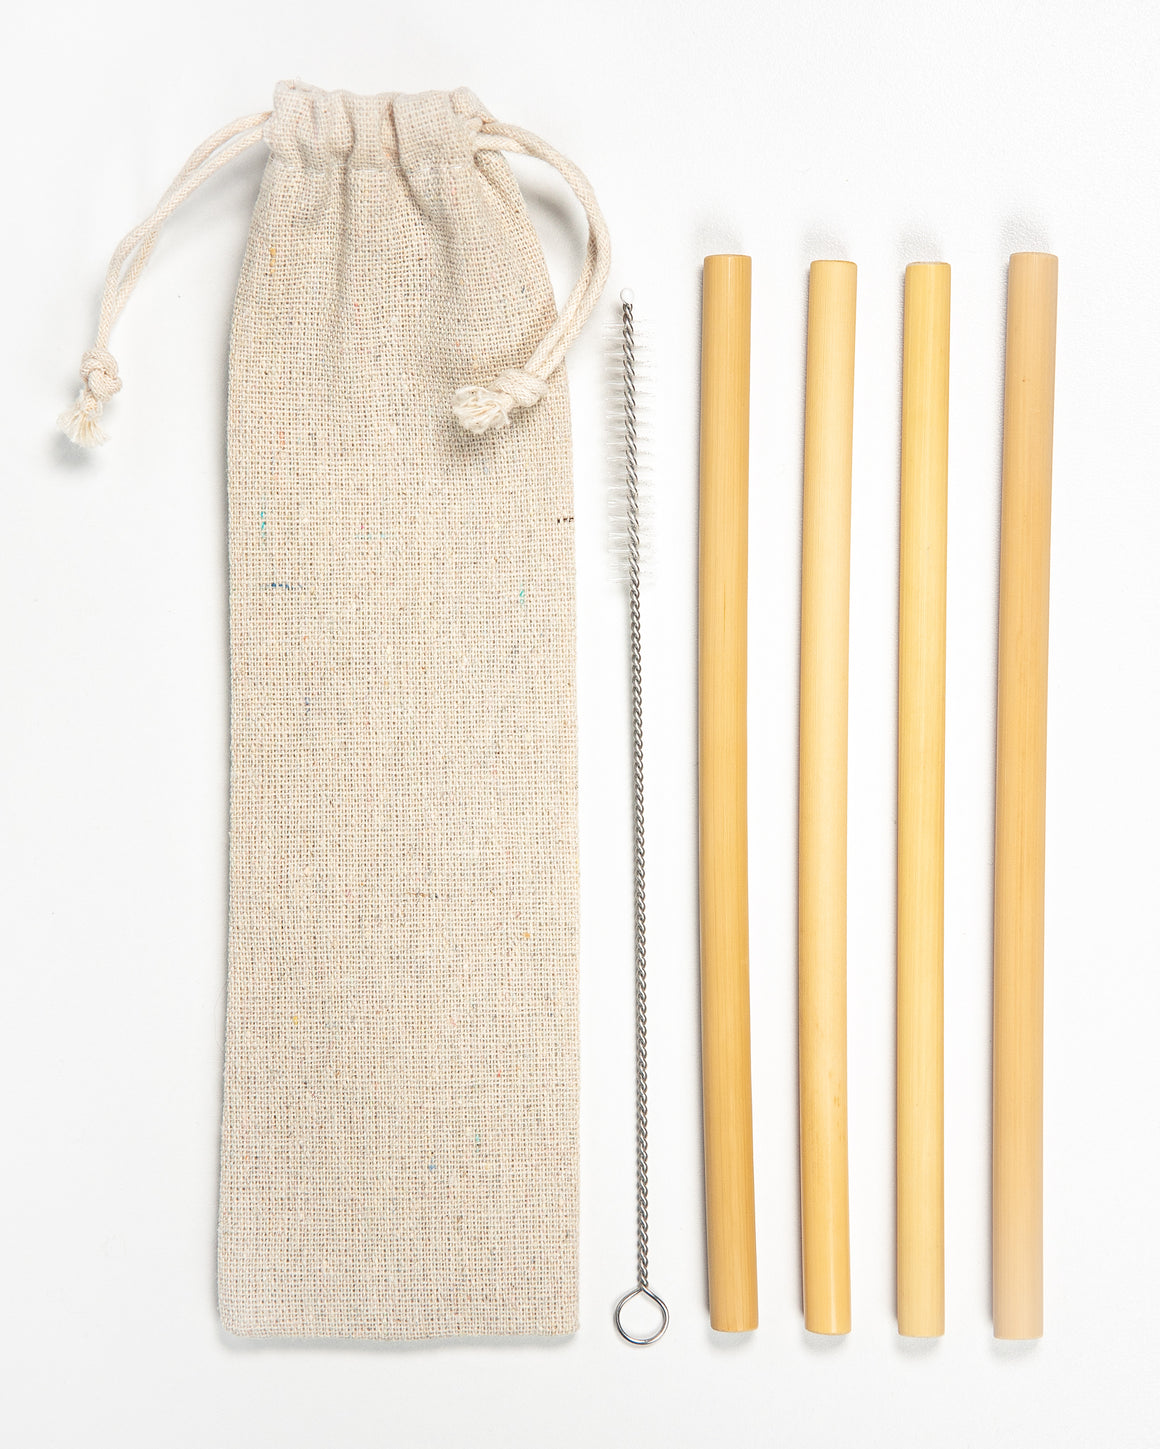 Reusable Bamboo Straw Sets